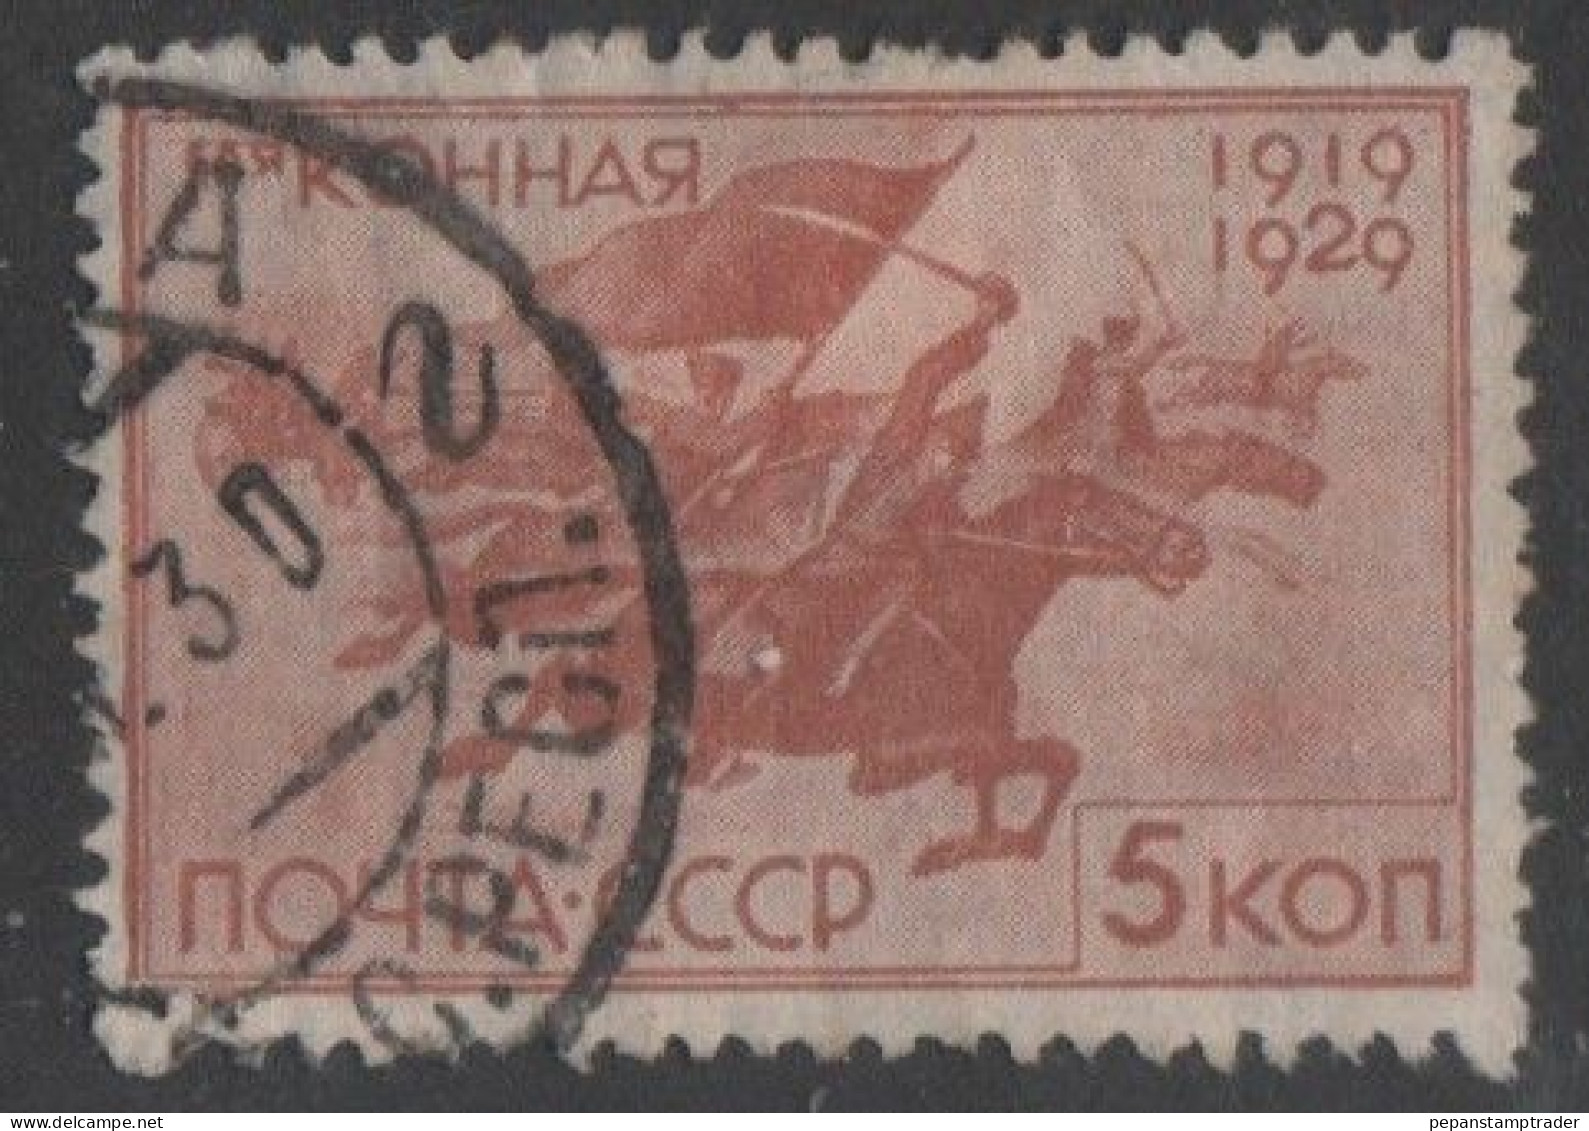 USSR - #432 -used - Usados